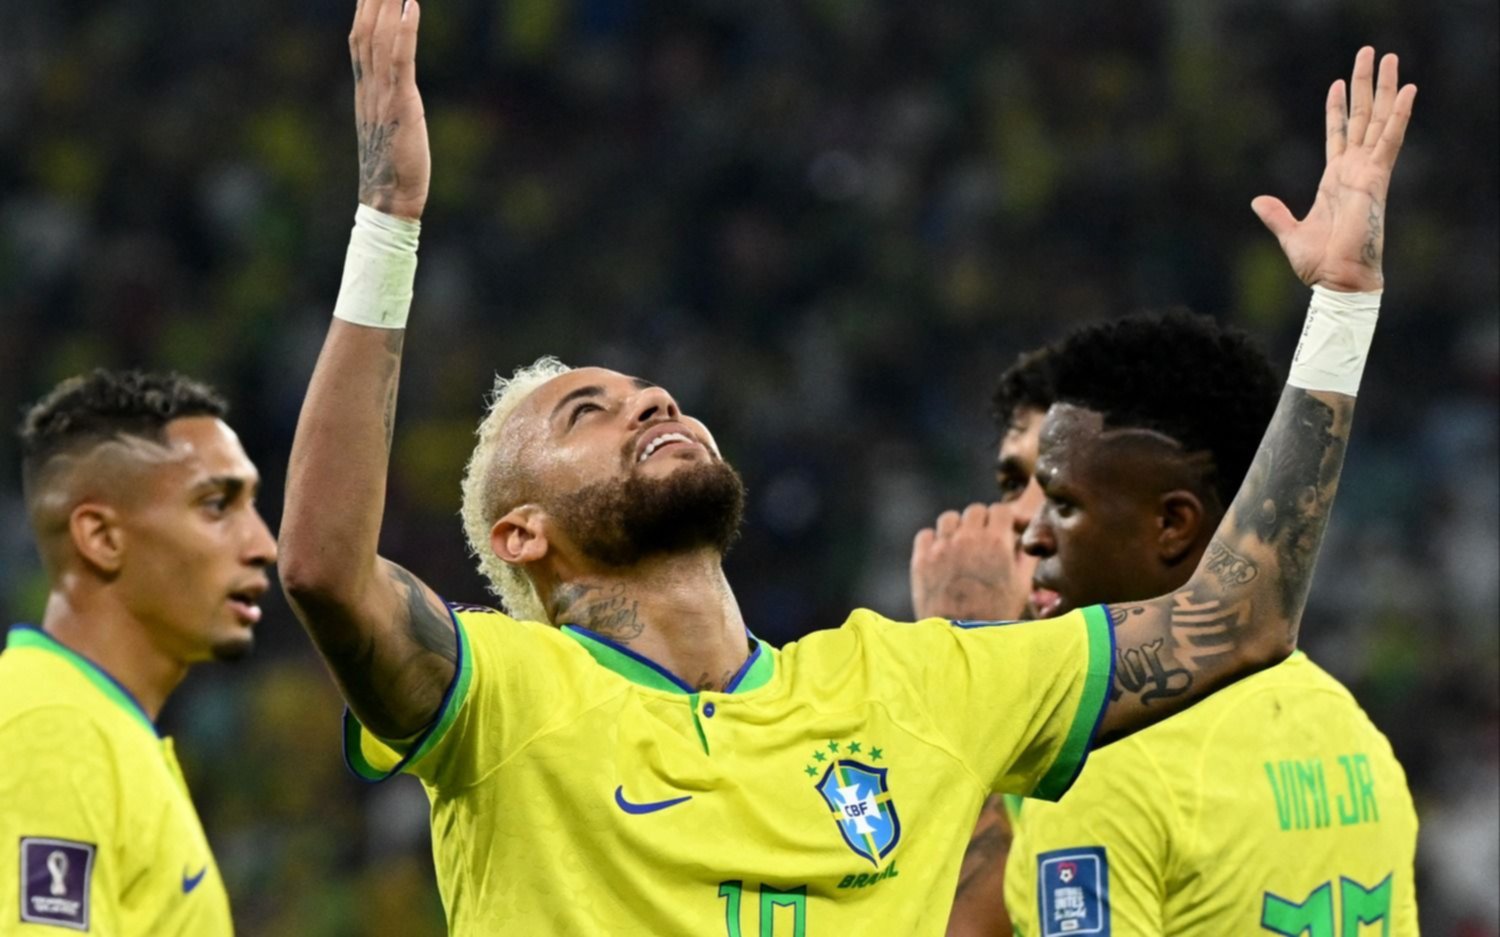 Volvió Neymar e ilusiona a todo Brasil: "Estamos cada vez más cerca"